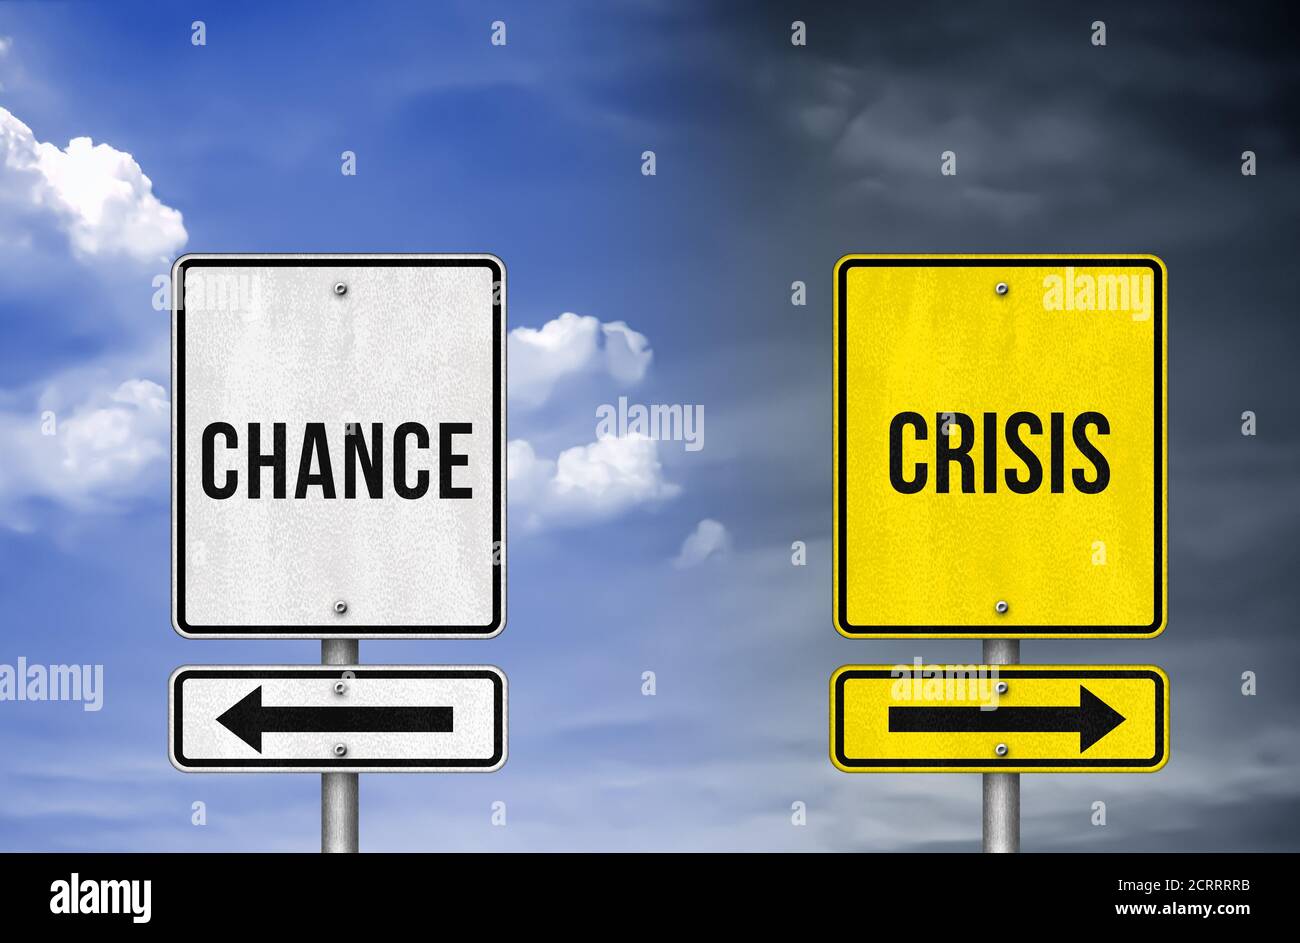 Chance versus Crisis - roadsign illustration Stock Photo